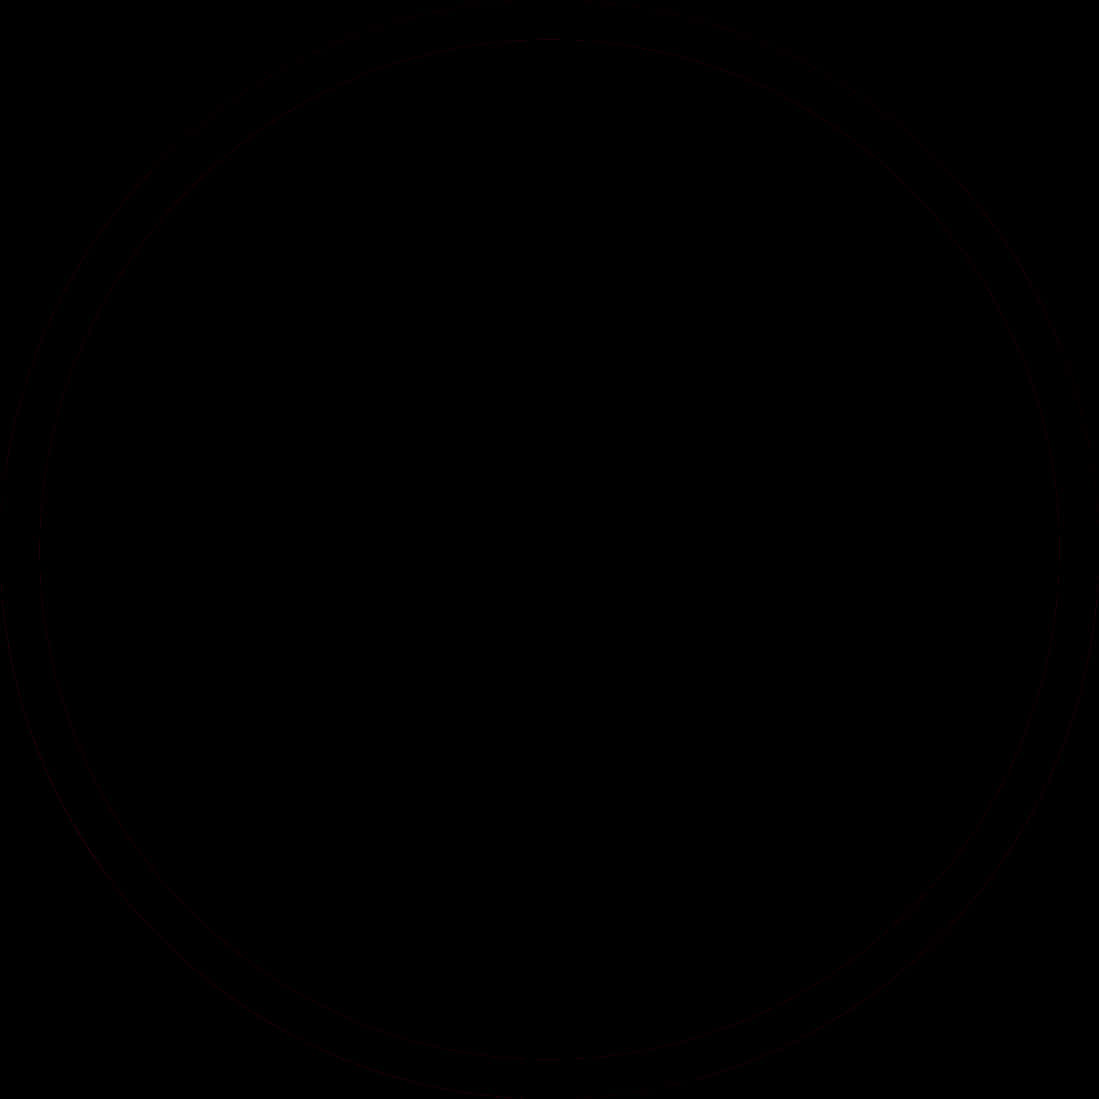 Perfect Black Circleon Transparent Background PNG image